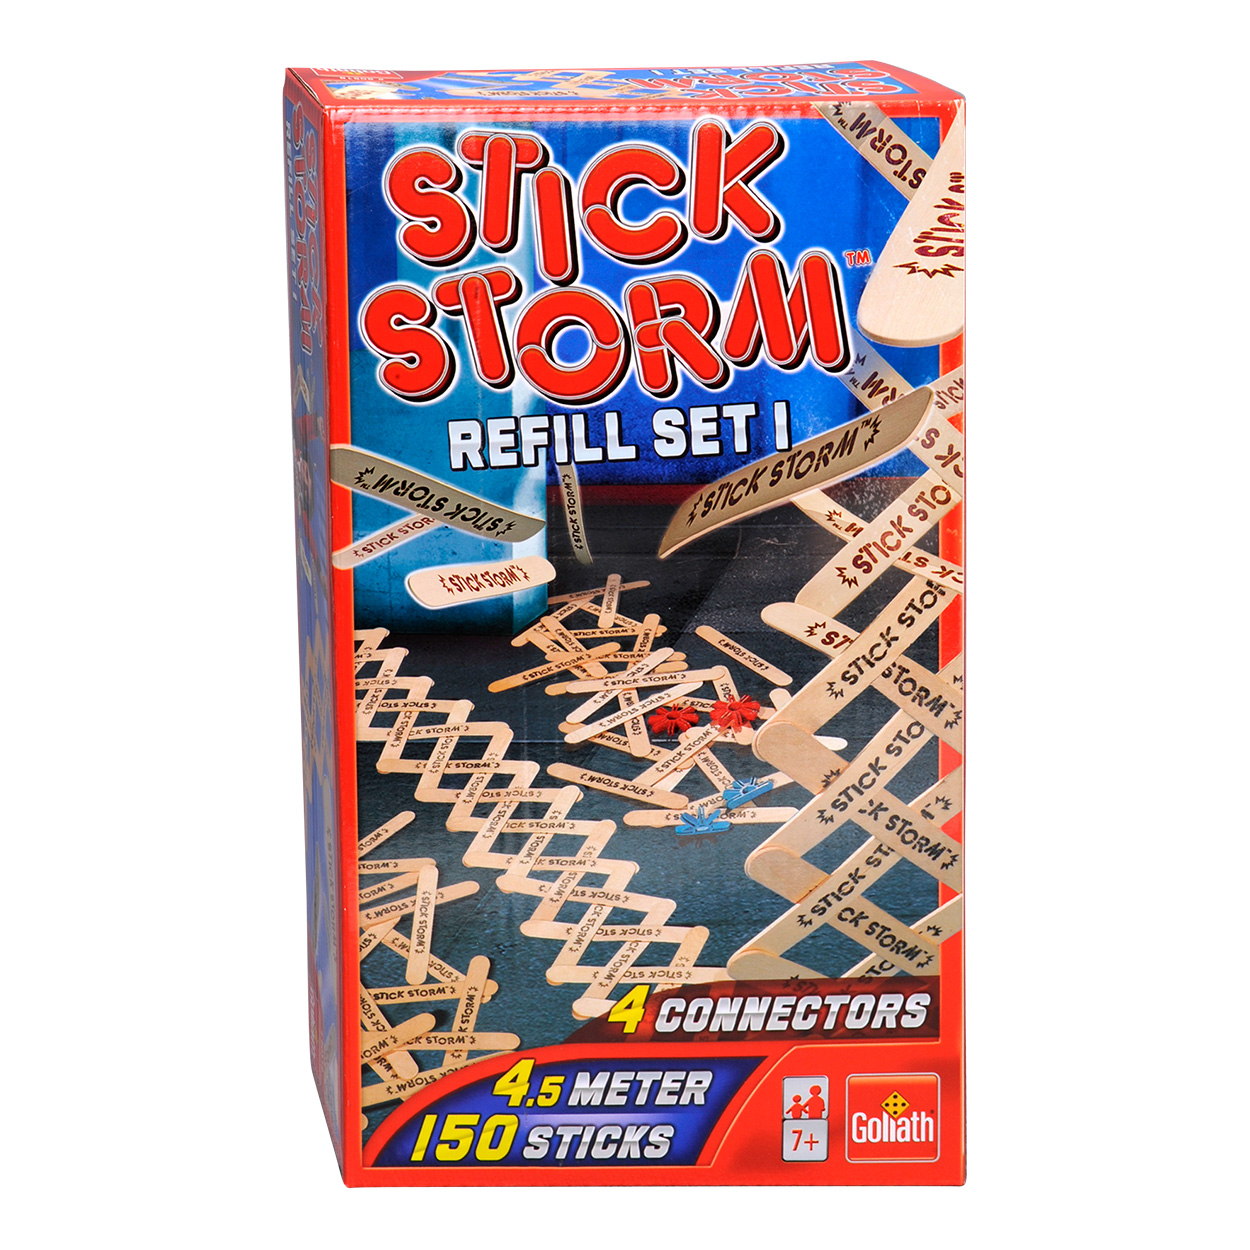 Stick Storm Refill Set 1